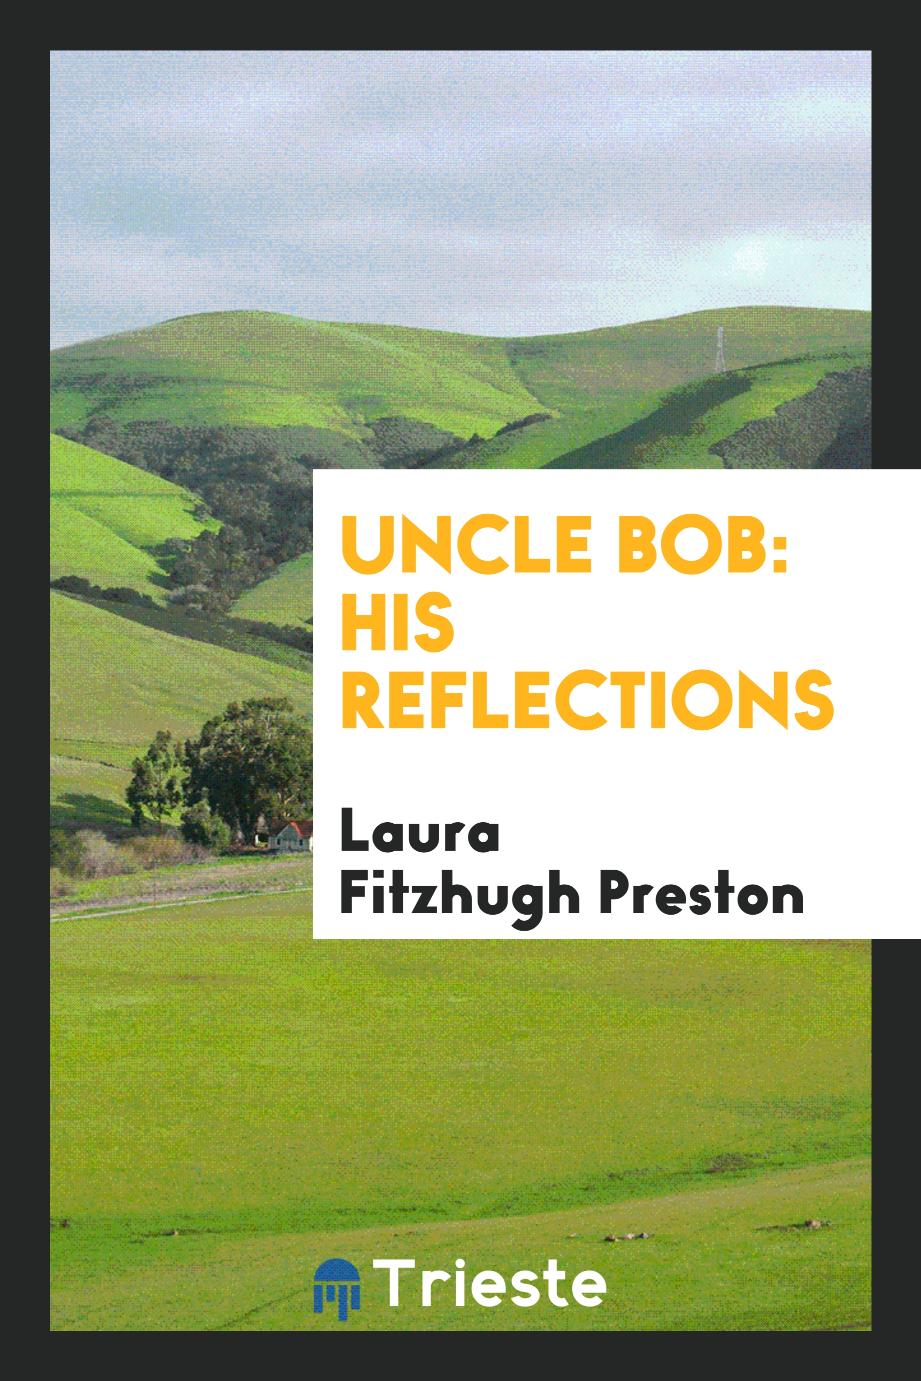 Uncle Bob: his reflections